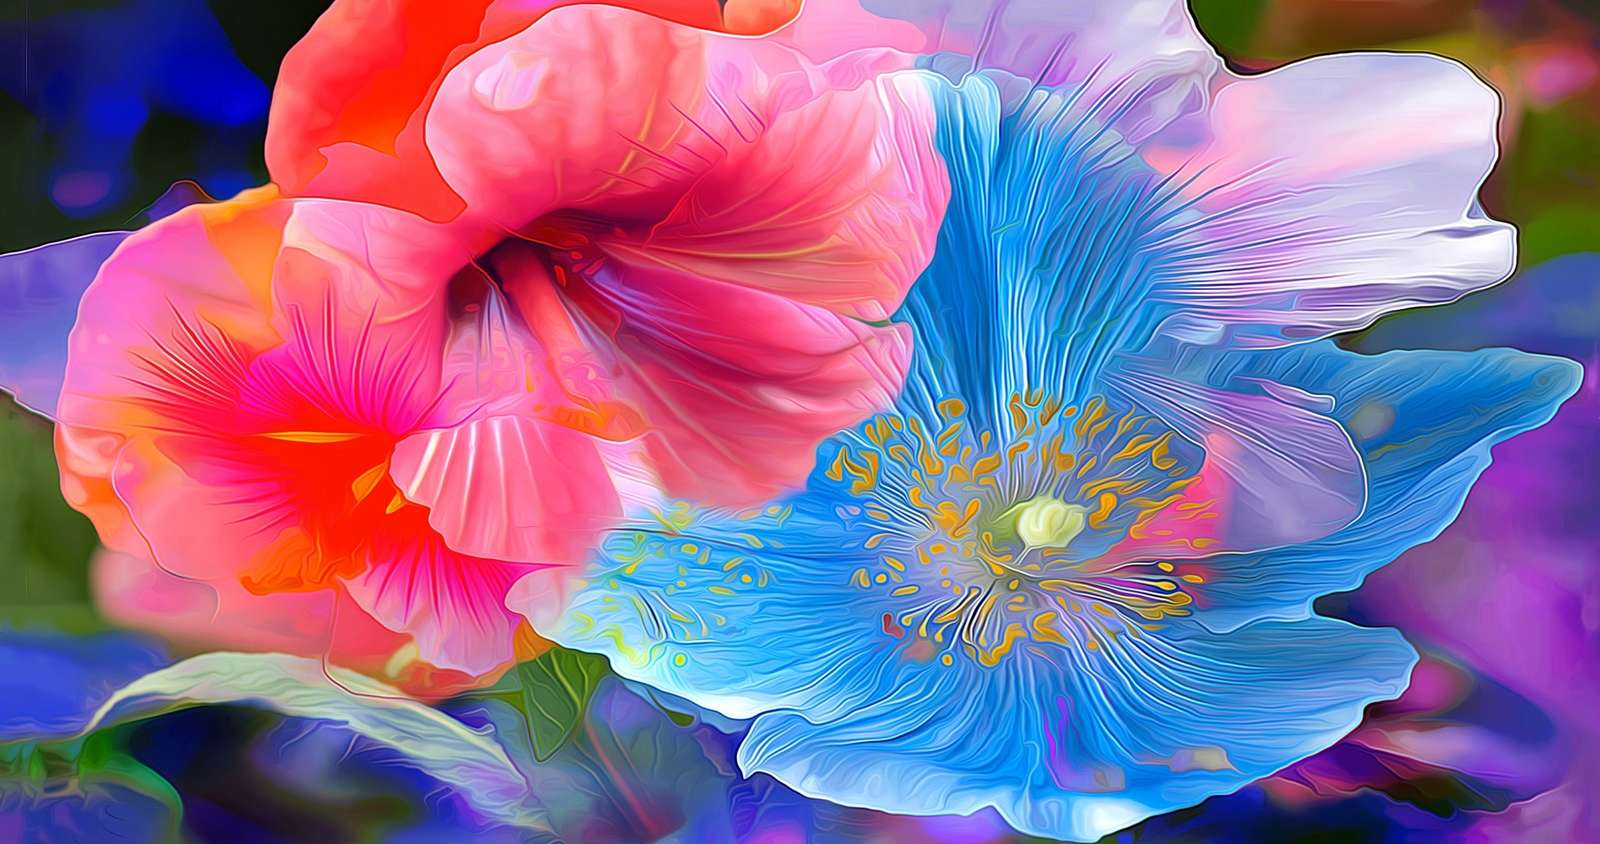 Abstracția florală puzzle online